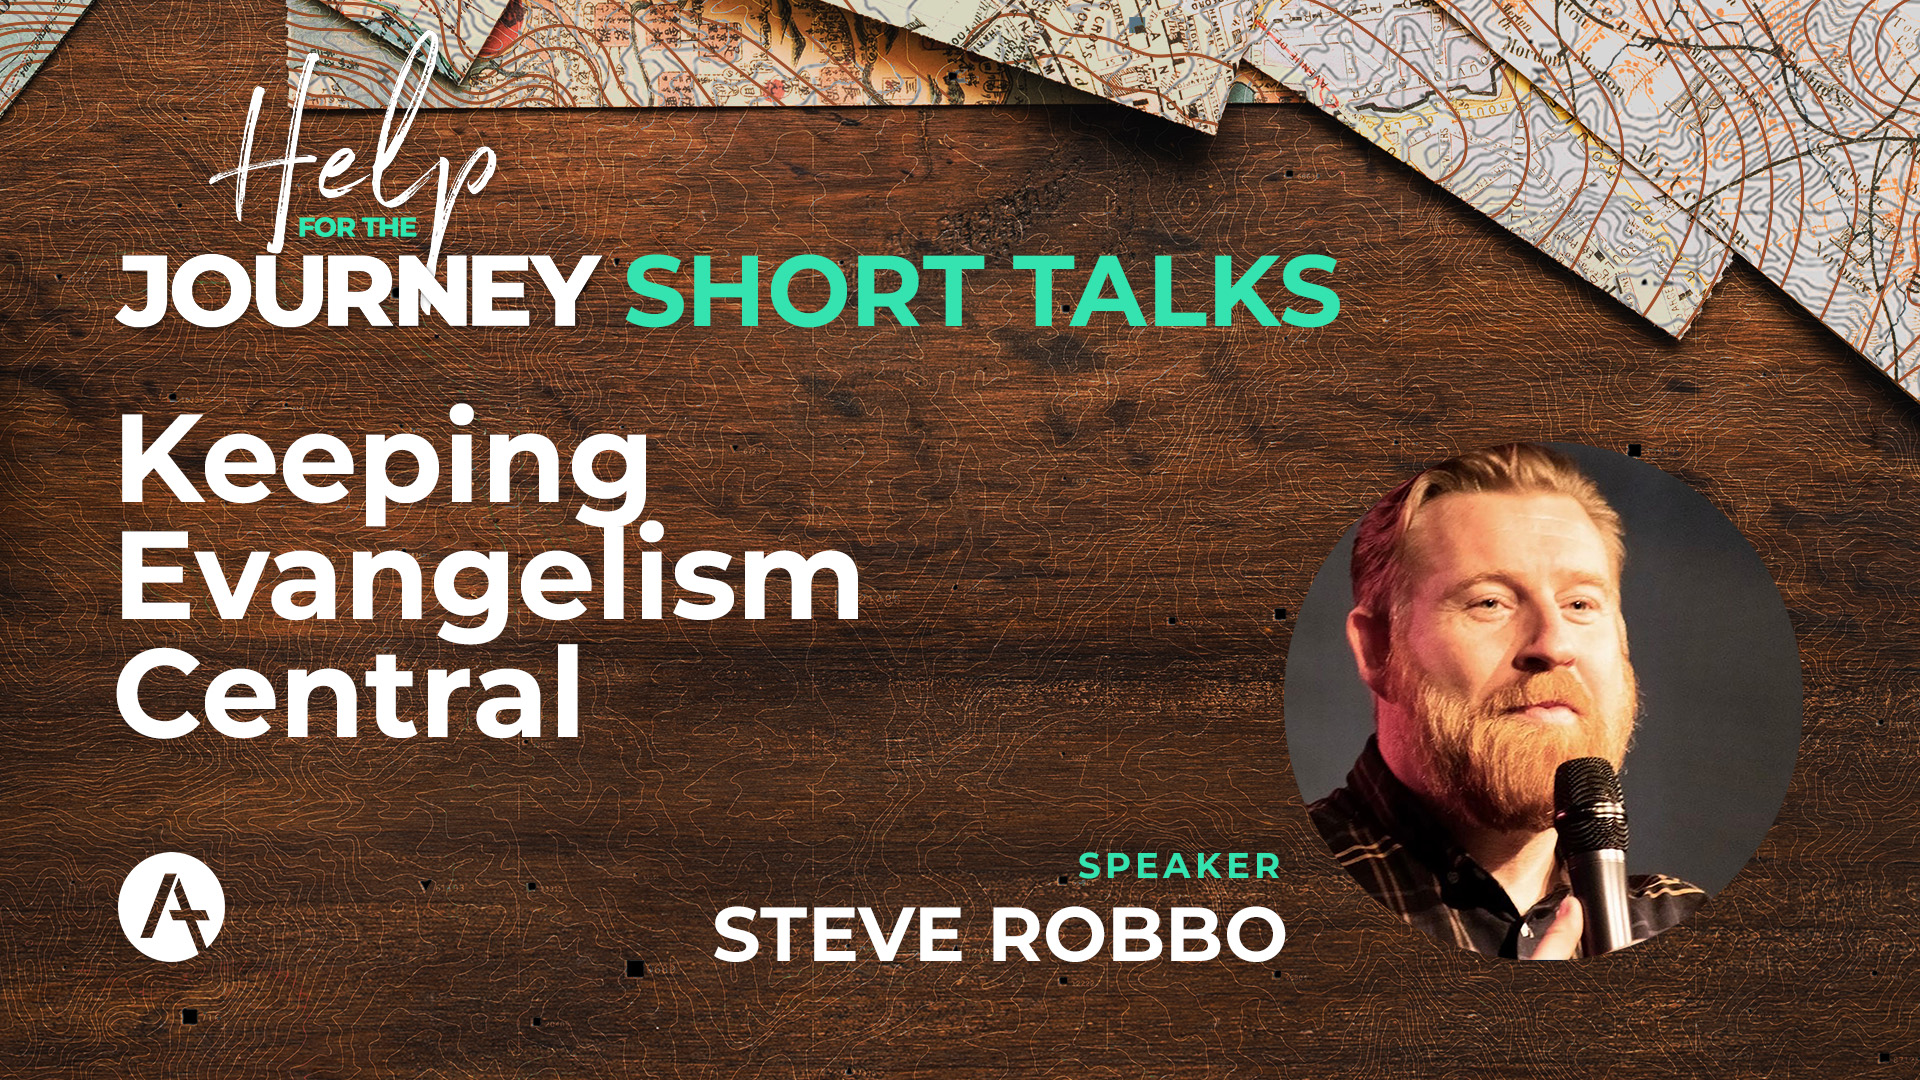 Short talks – Steve Robbo: Keeping Evangelism Central